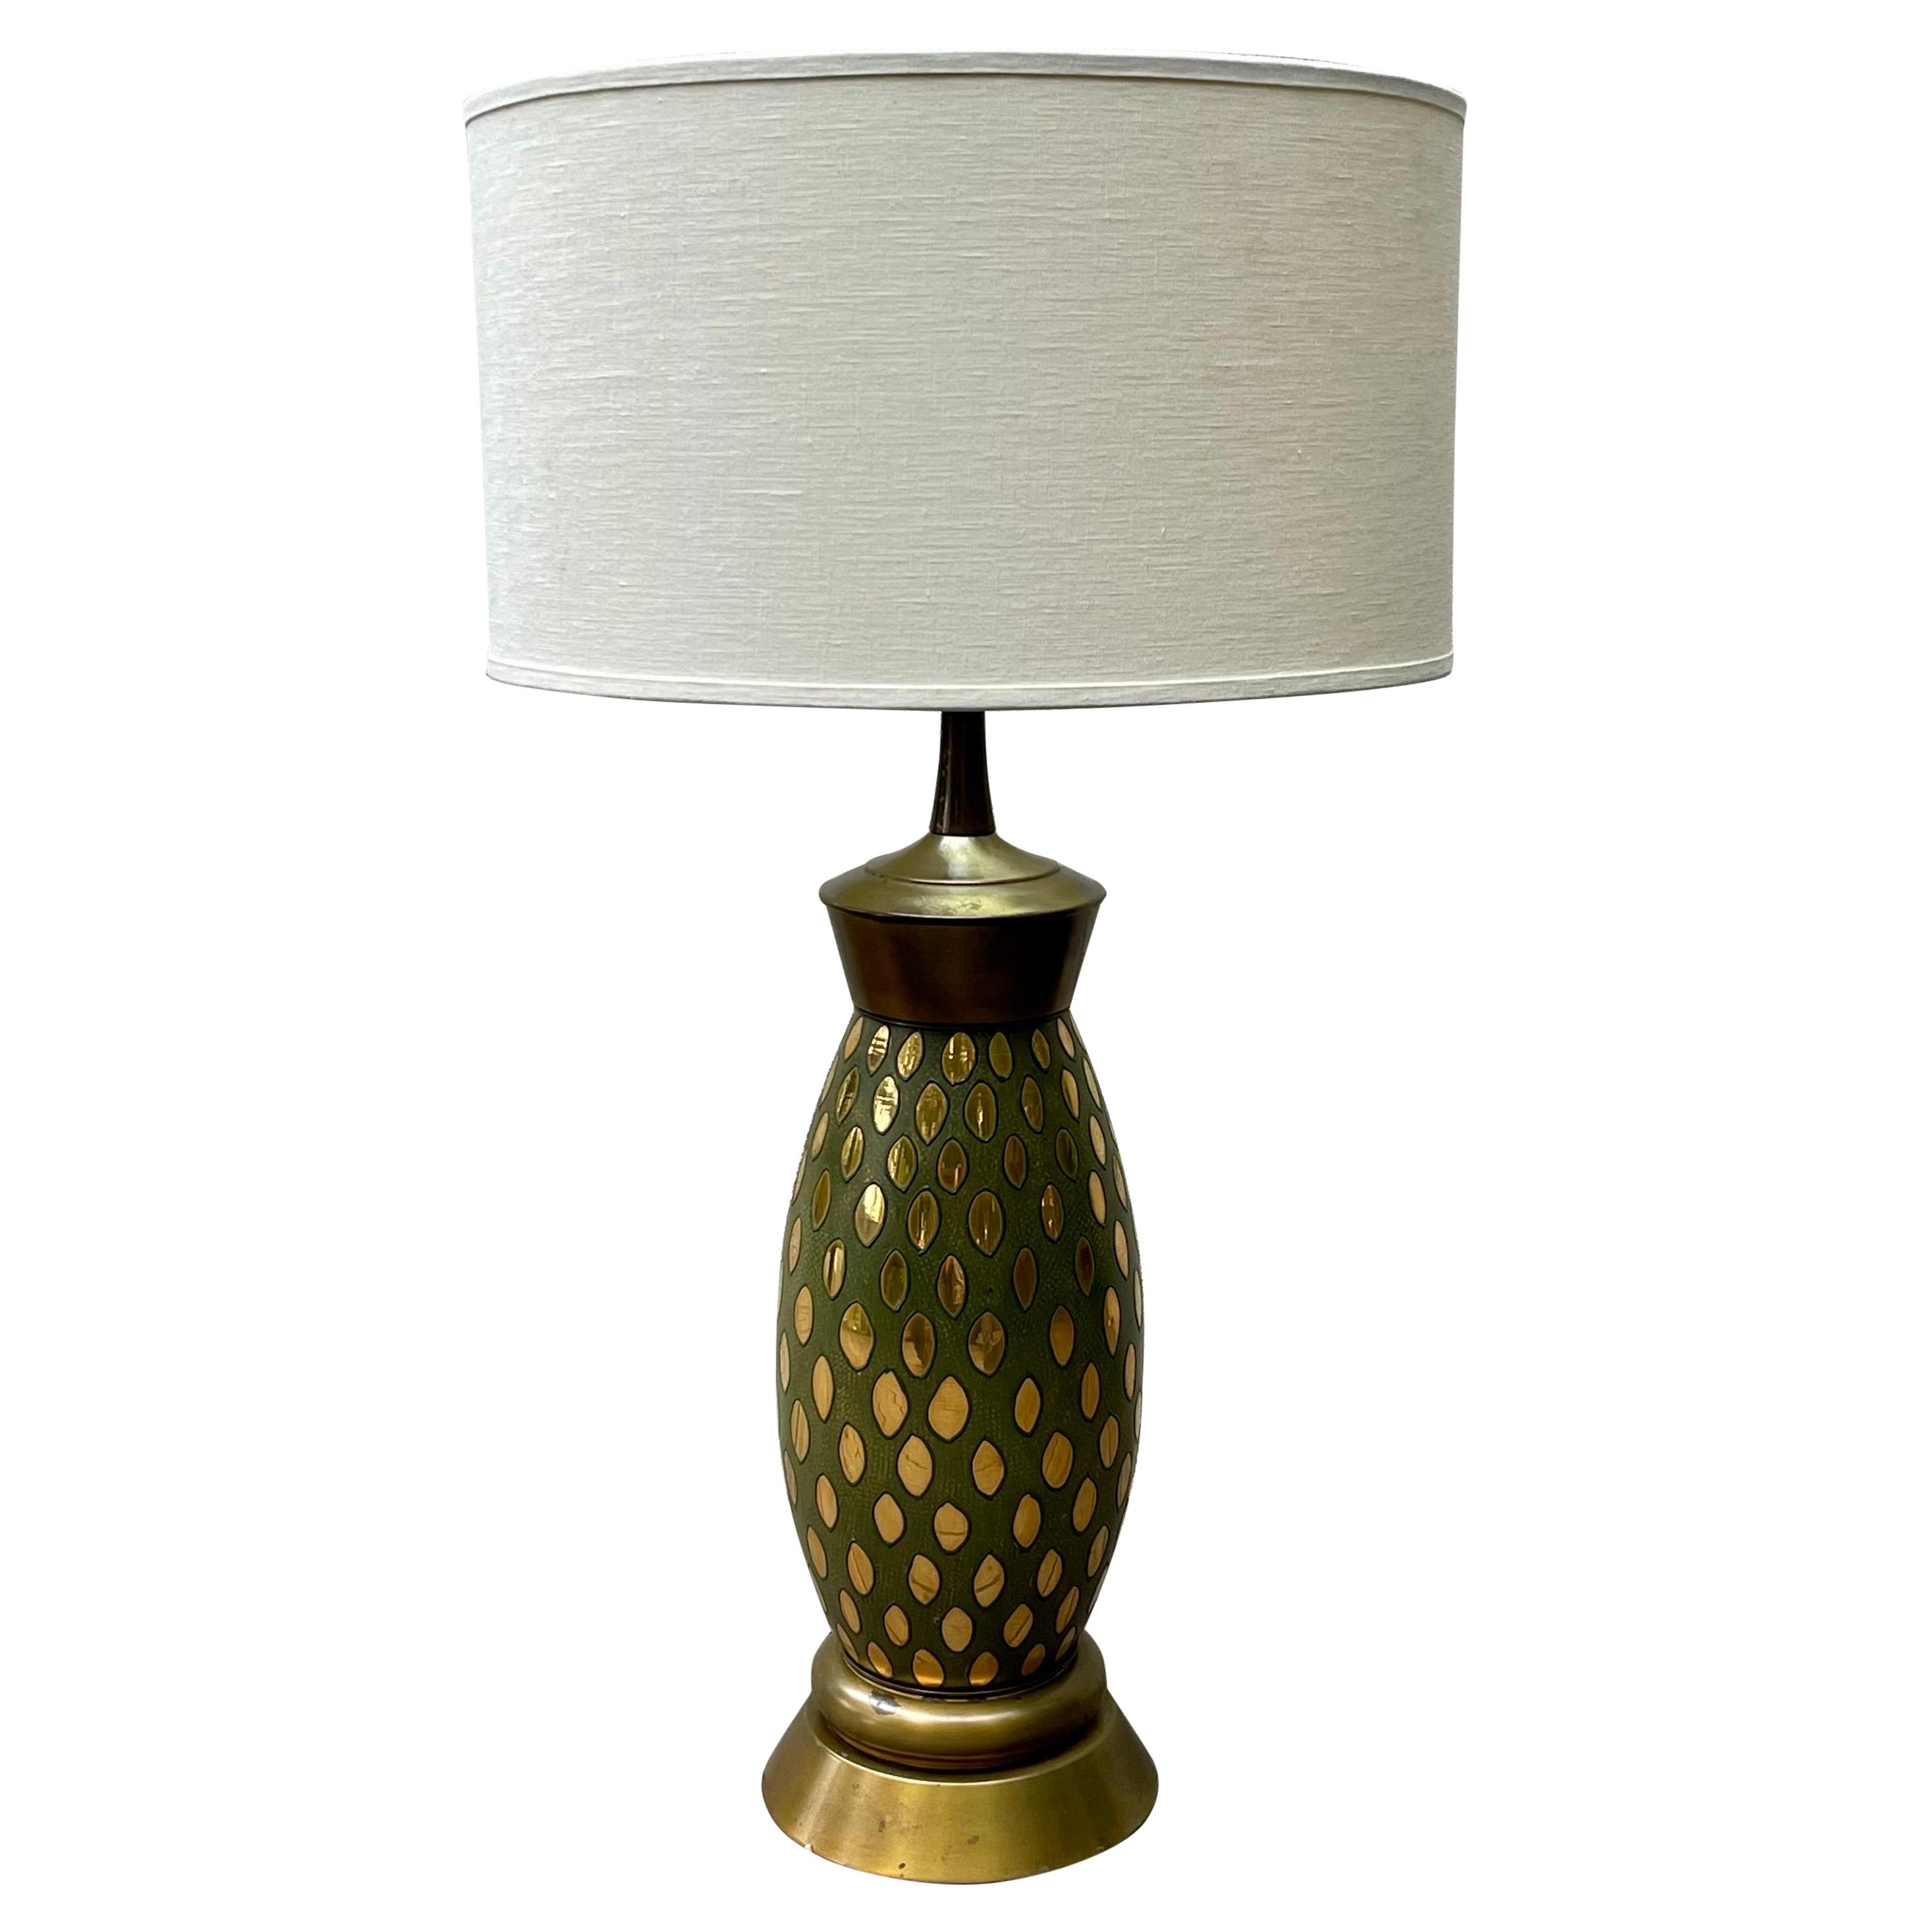 Mid-Century Modern Italian Art Glass Table Lamp, Vibrant Green with Gold Pattern